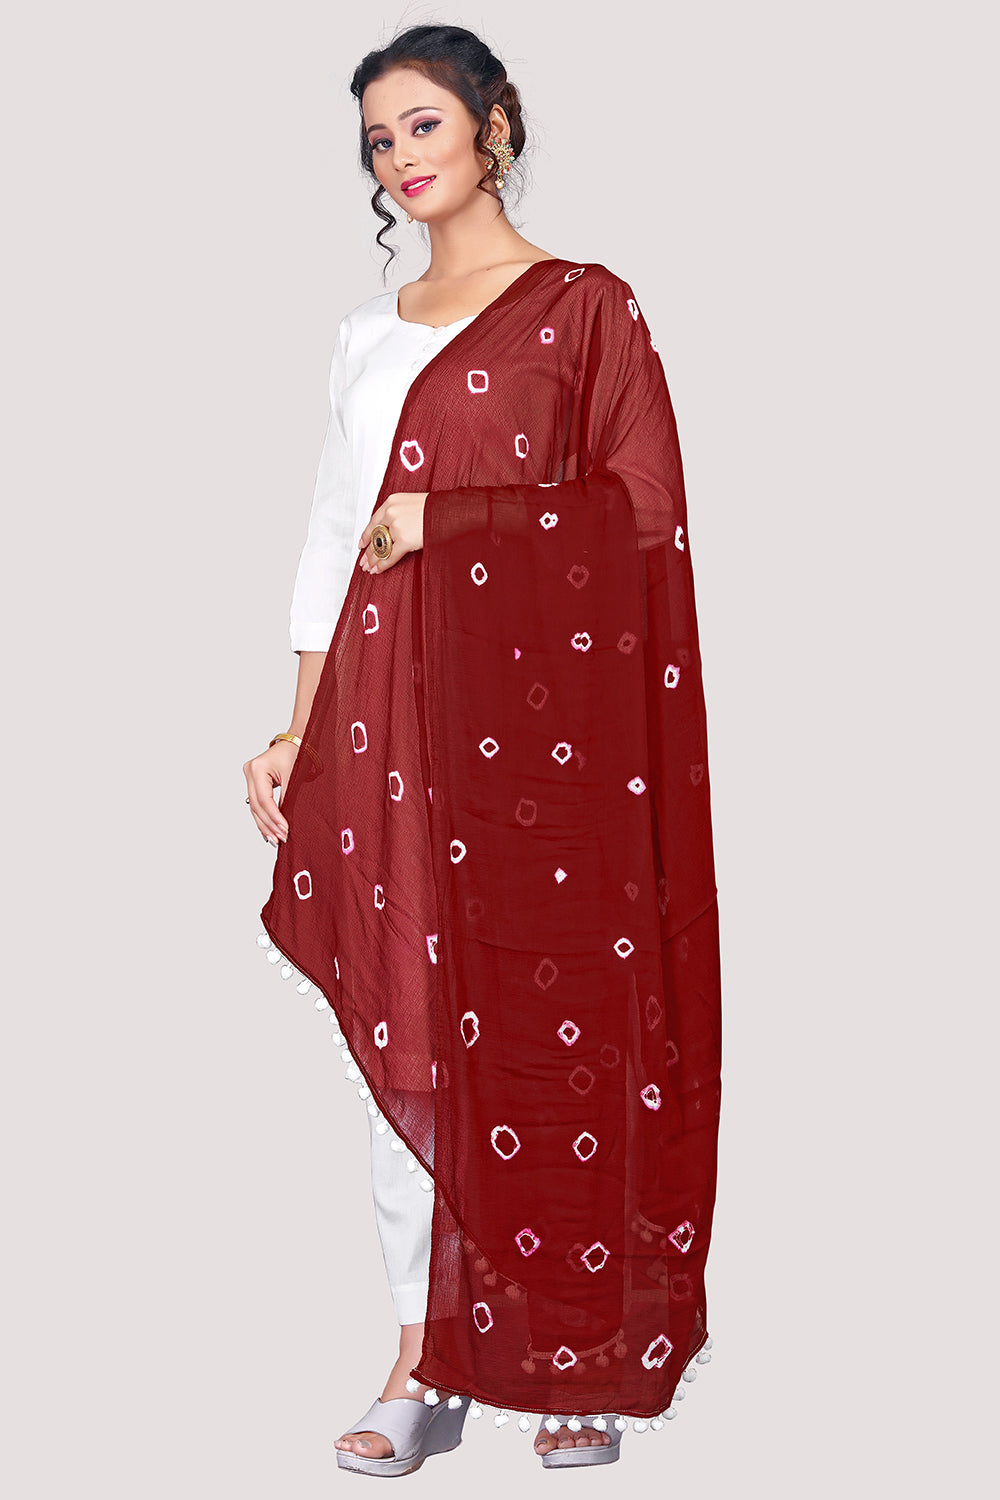 Women's Maroon  Bandhani Print Woven Chiffon Dupatta  - NIMIDHYA